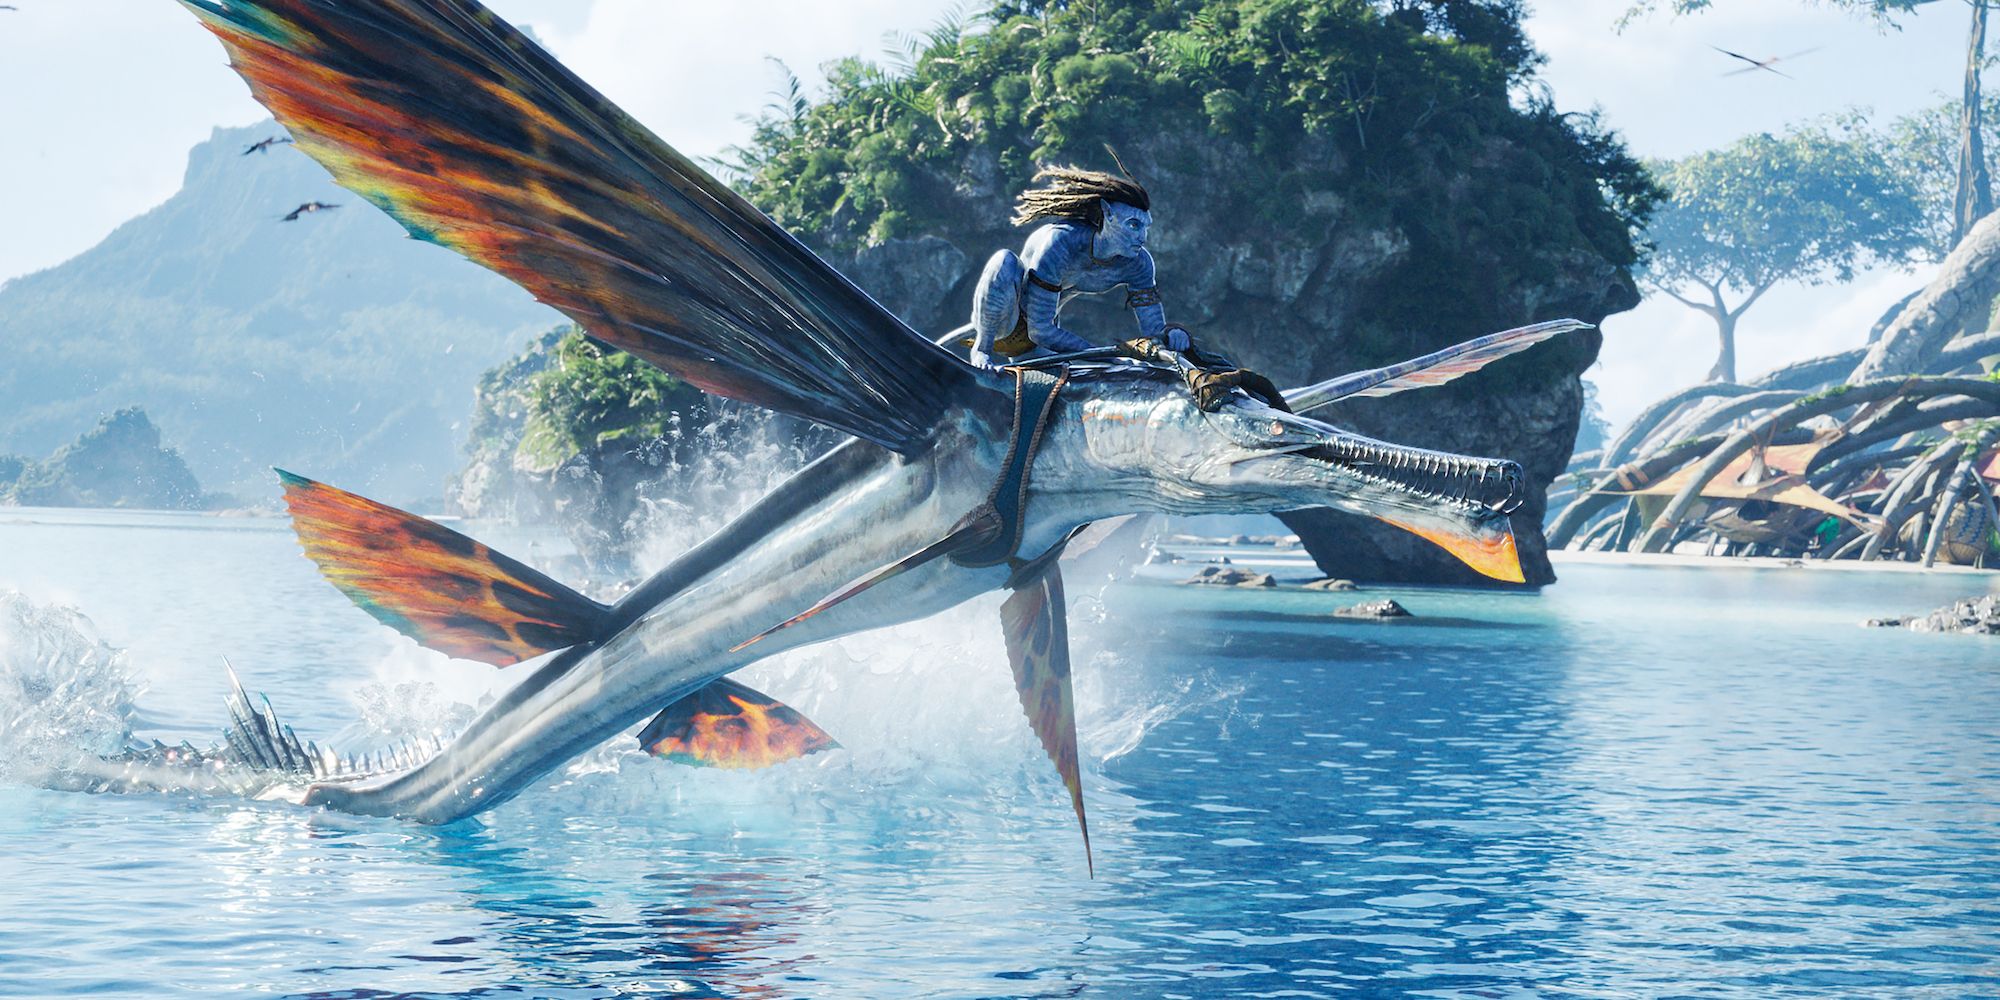 Avatar 3 Will Connect To Disney World’s Pandora, Says James Cameron